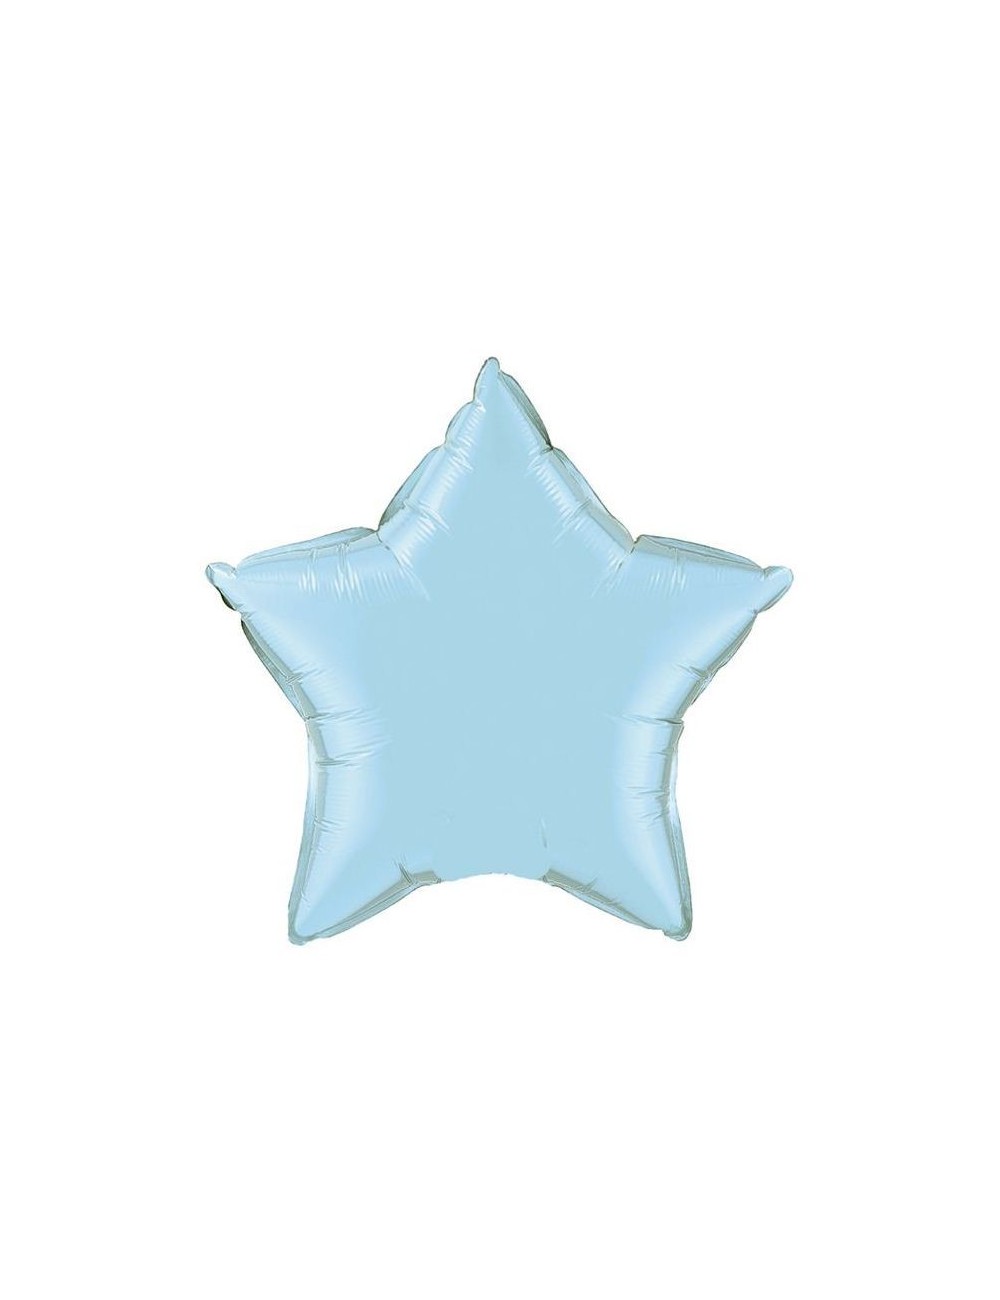 Ballon en aluminium en forme d'étoile 91 cm